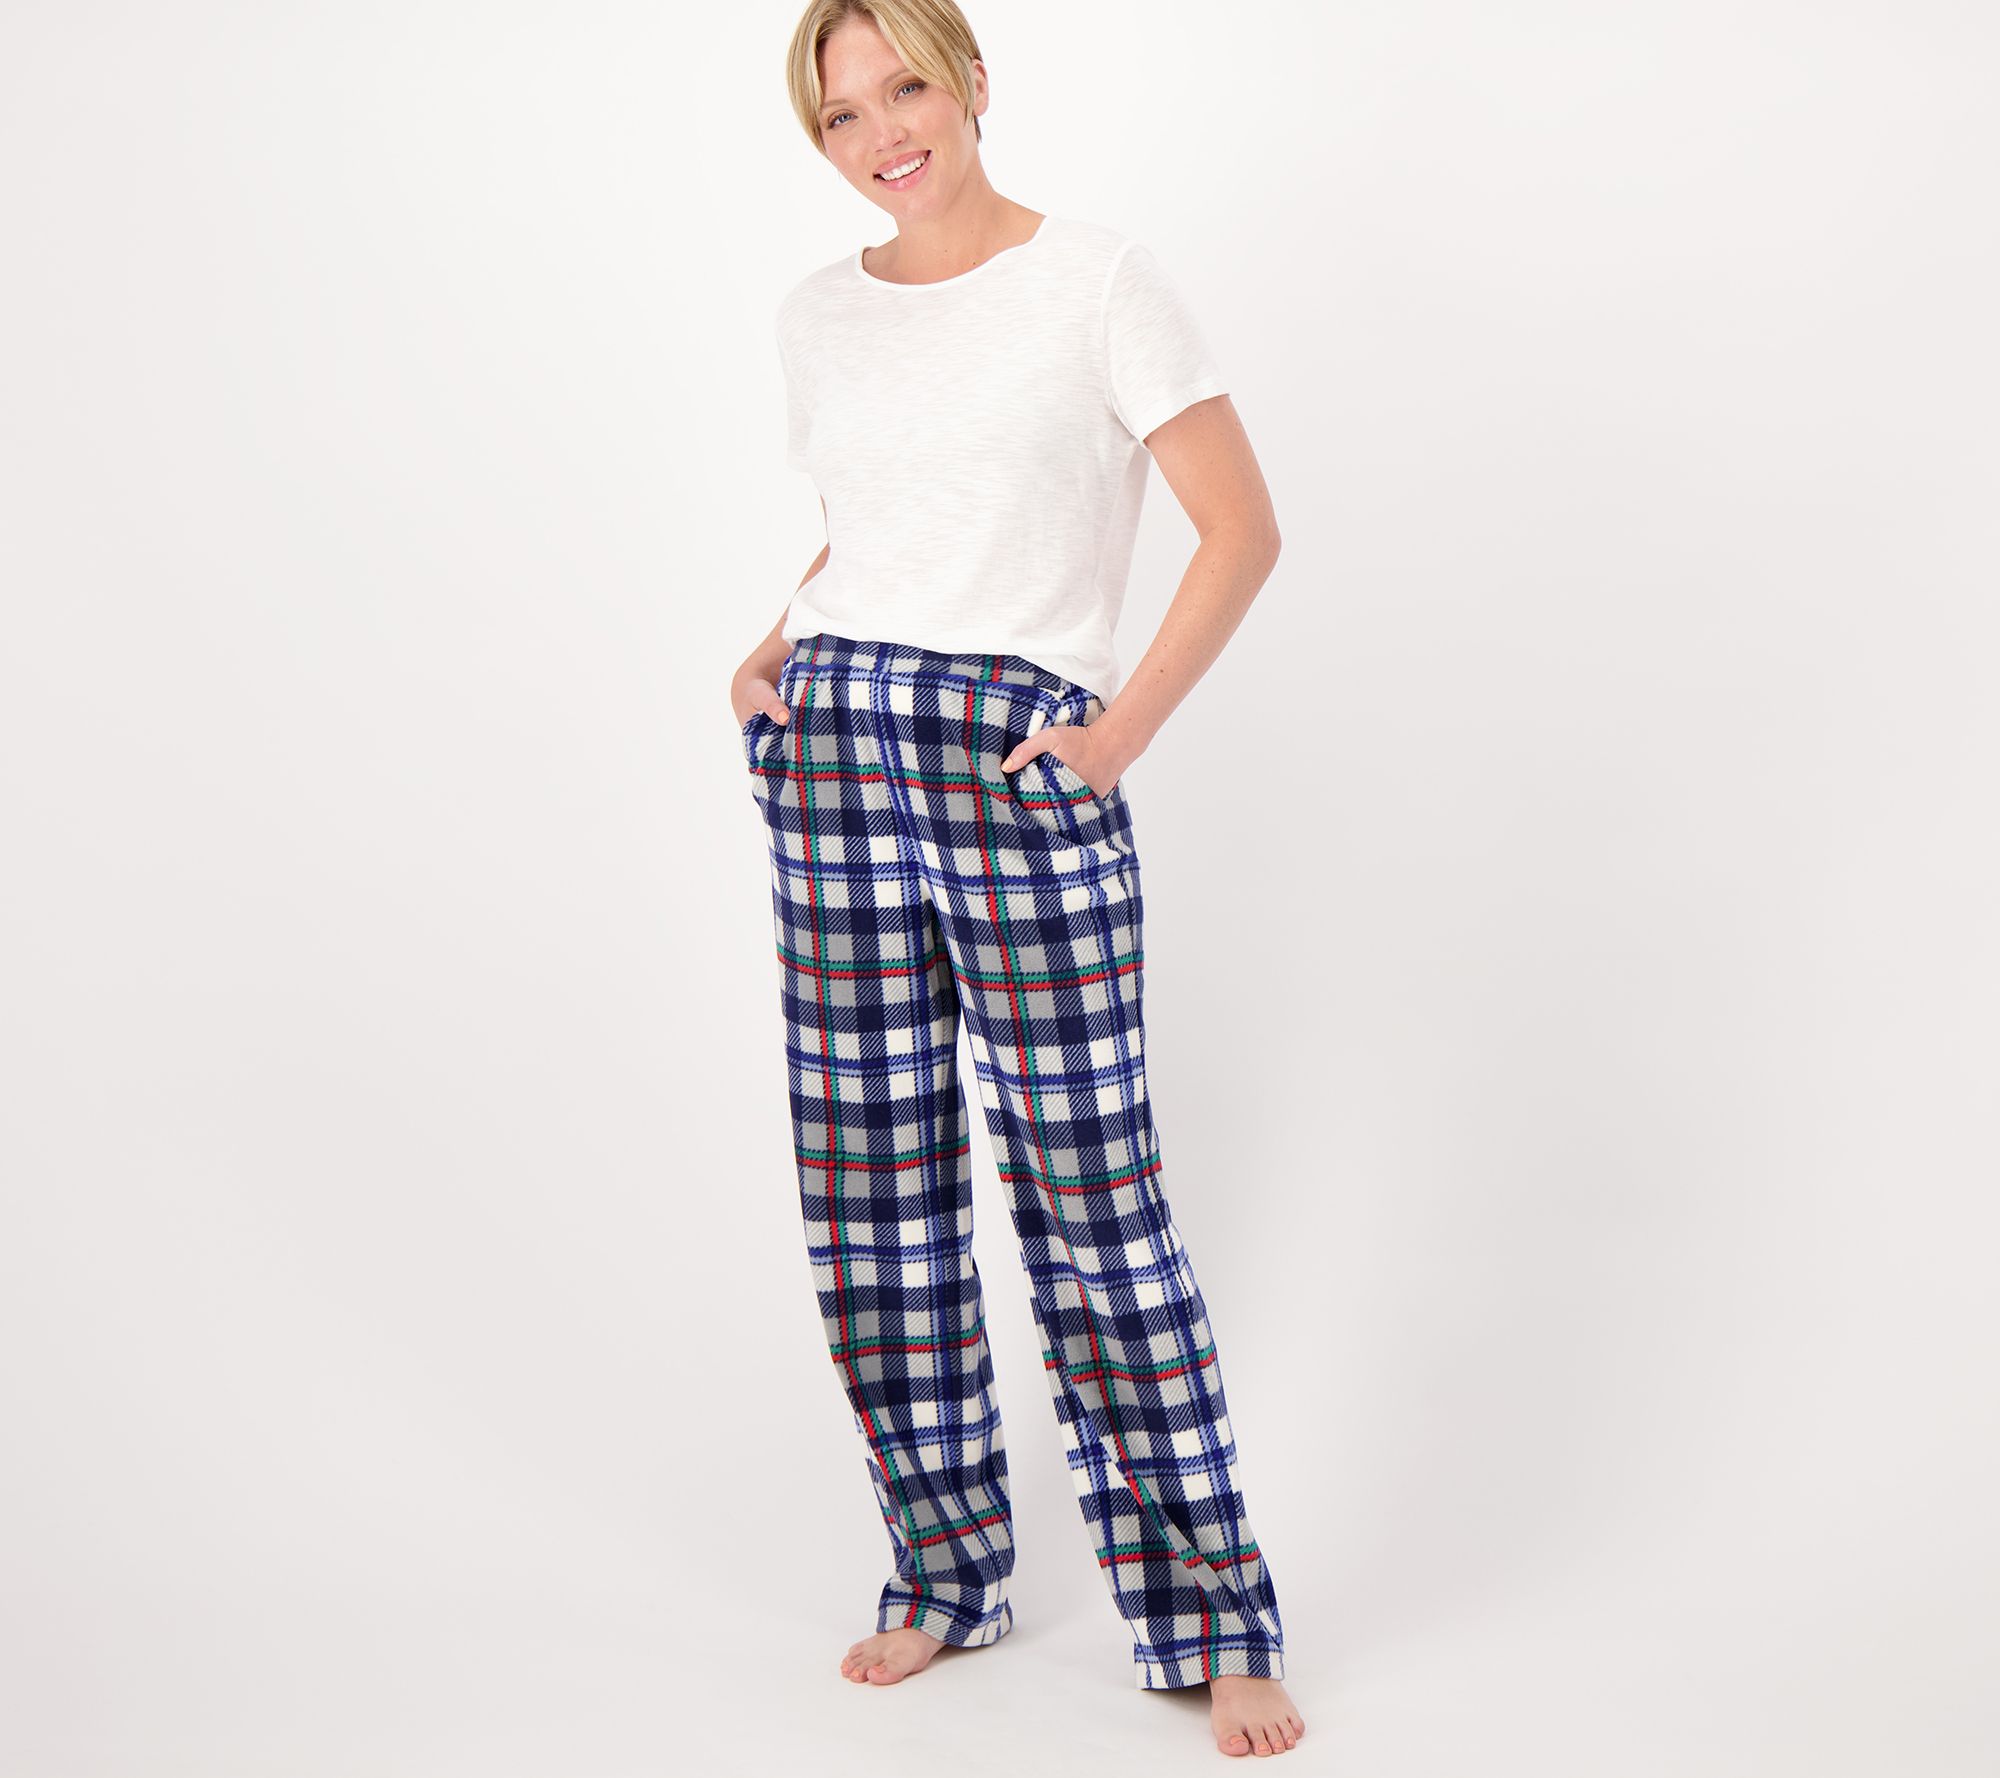 Denim & Co. Comfort Zone Petite Printed Fleece Pull-On Pants - QVC.com